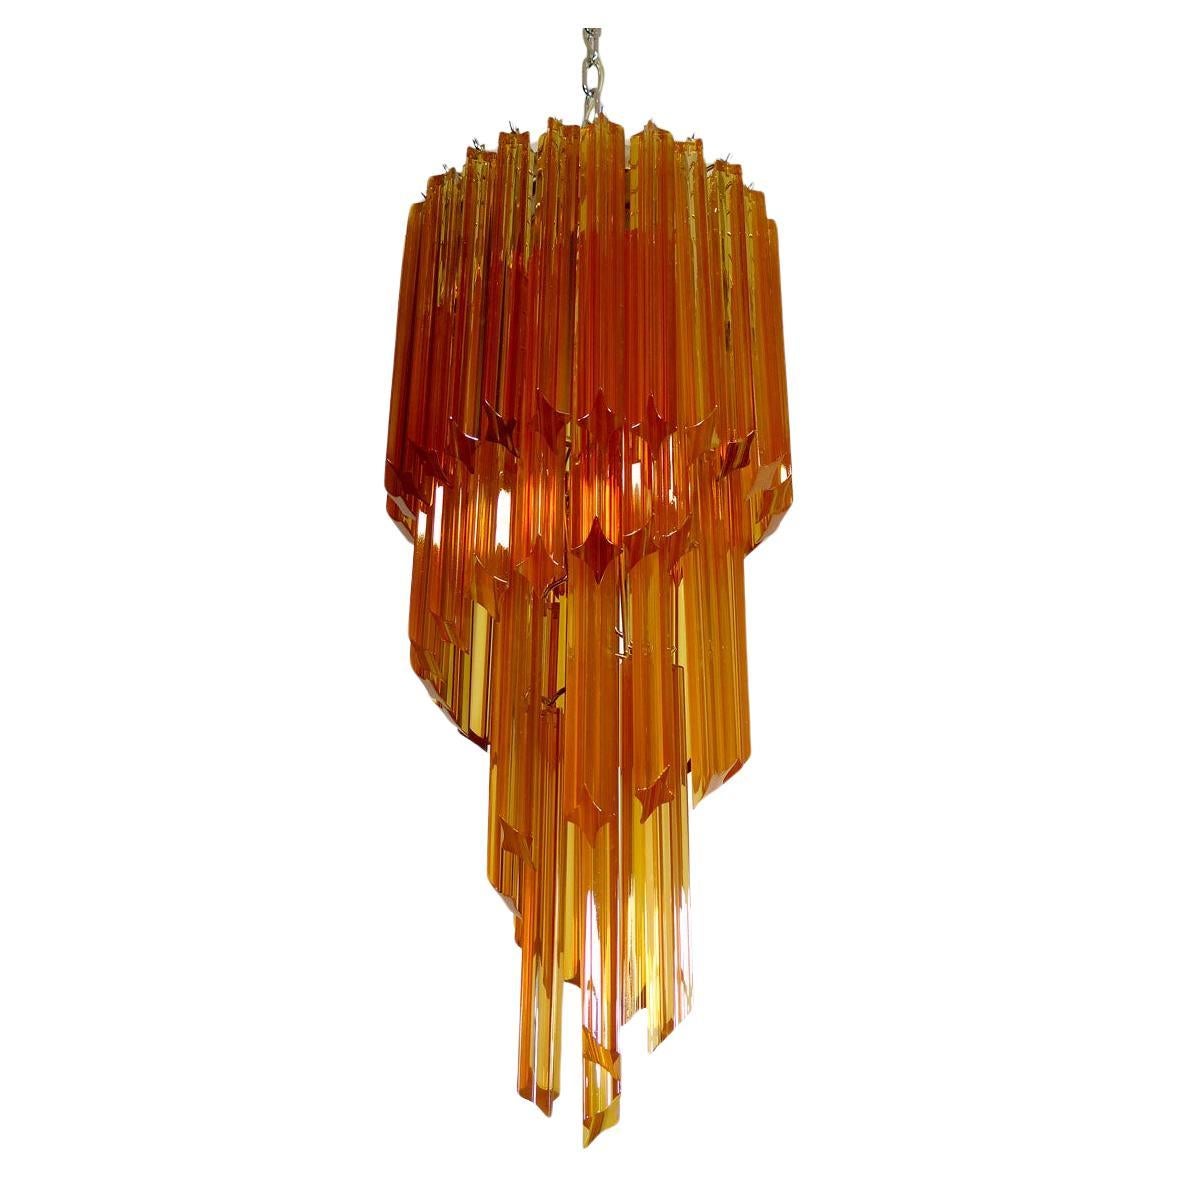 Murano vintage chandelier – 54 quadriedri amber prisms